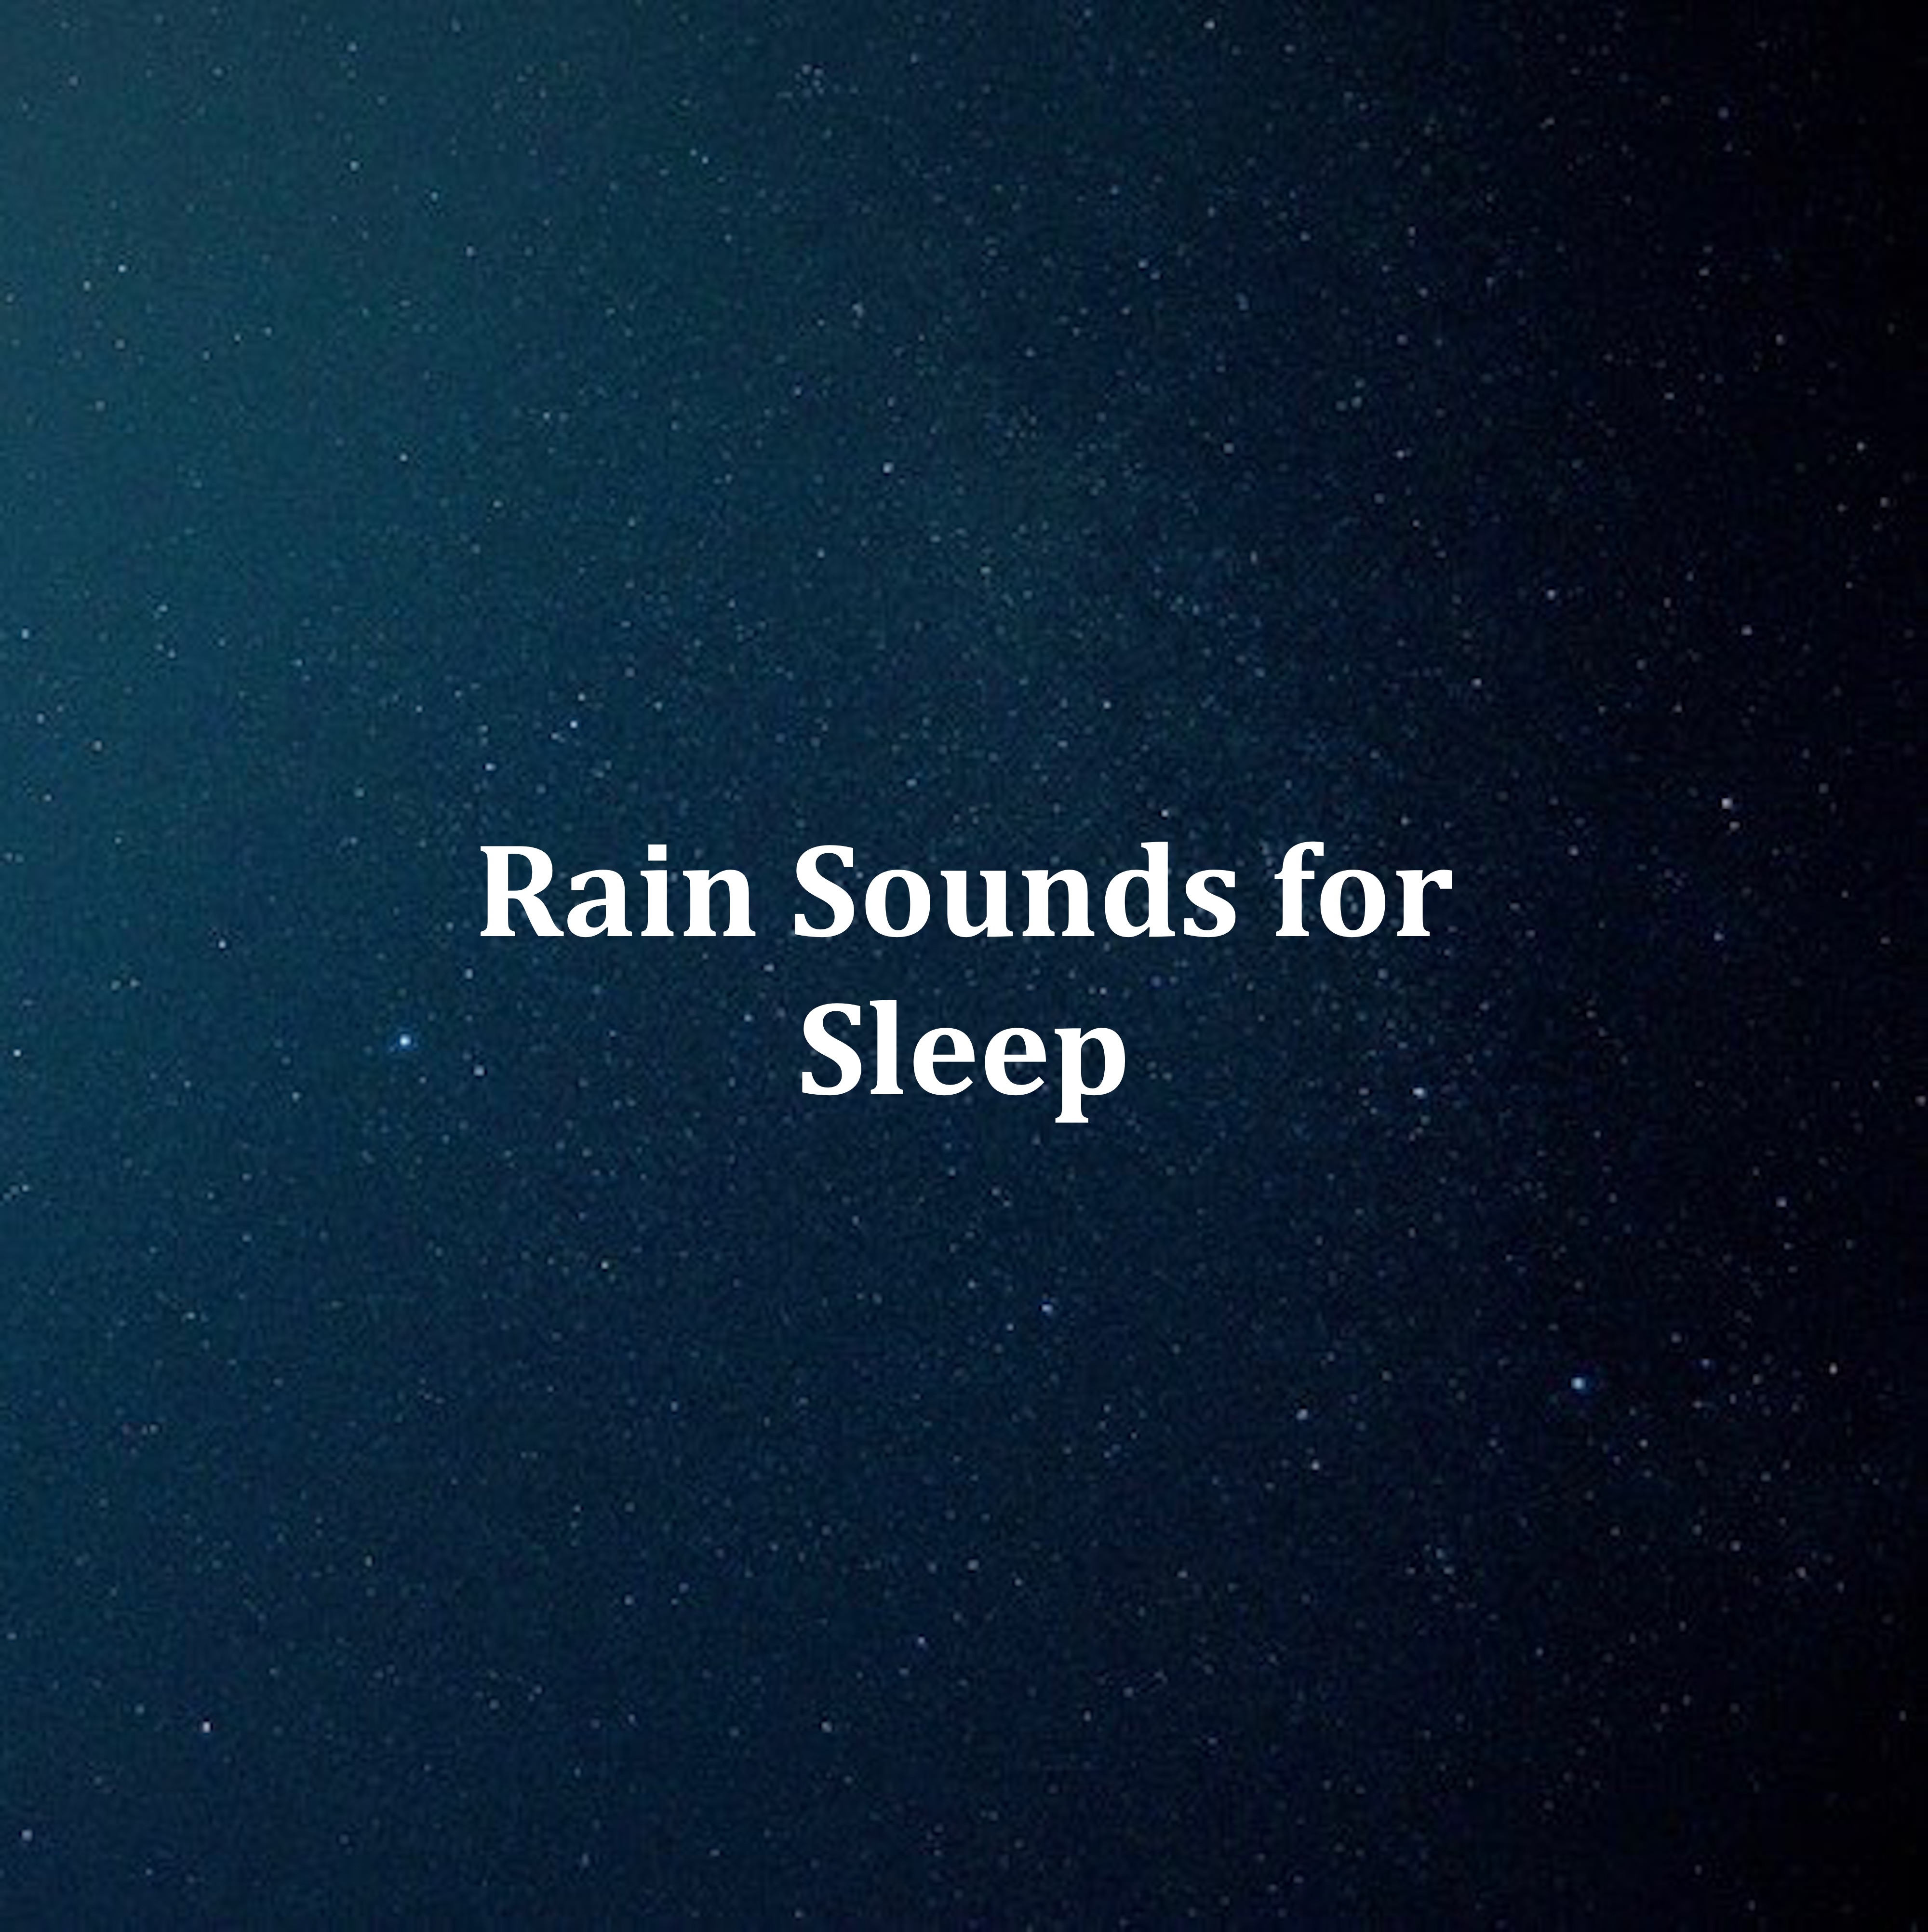 12 Natural Rain Sounds for Sleep, Meditation and Focus